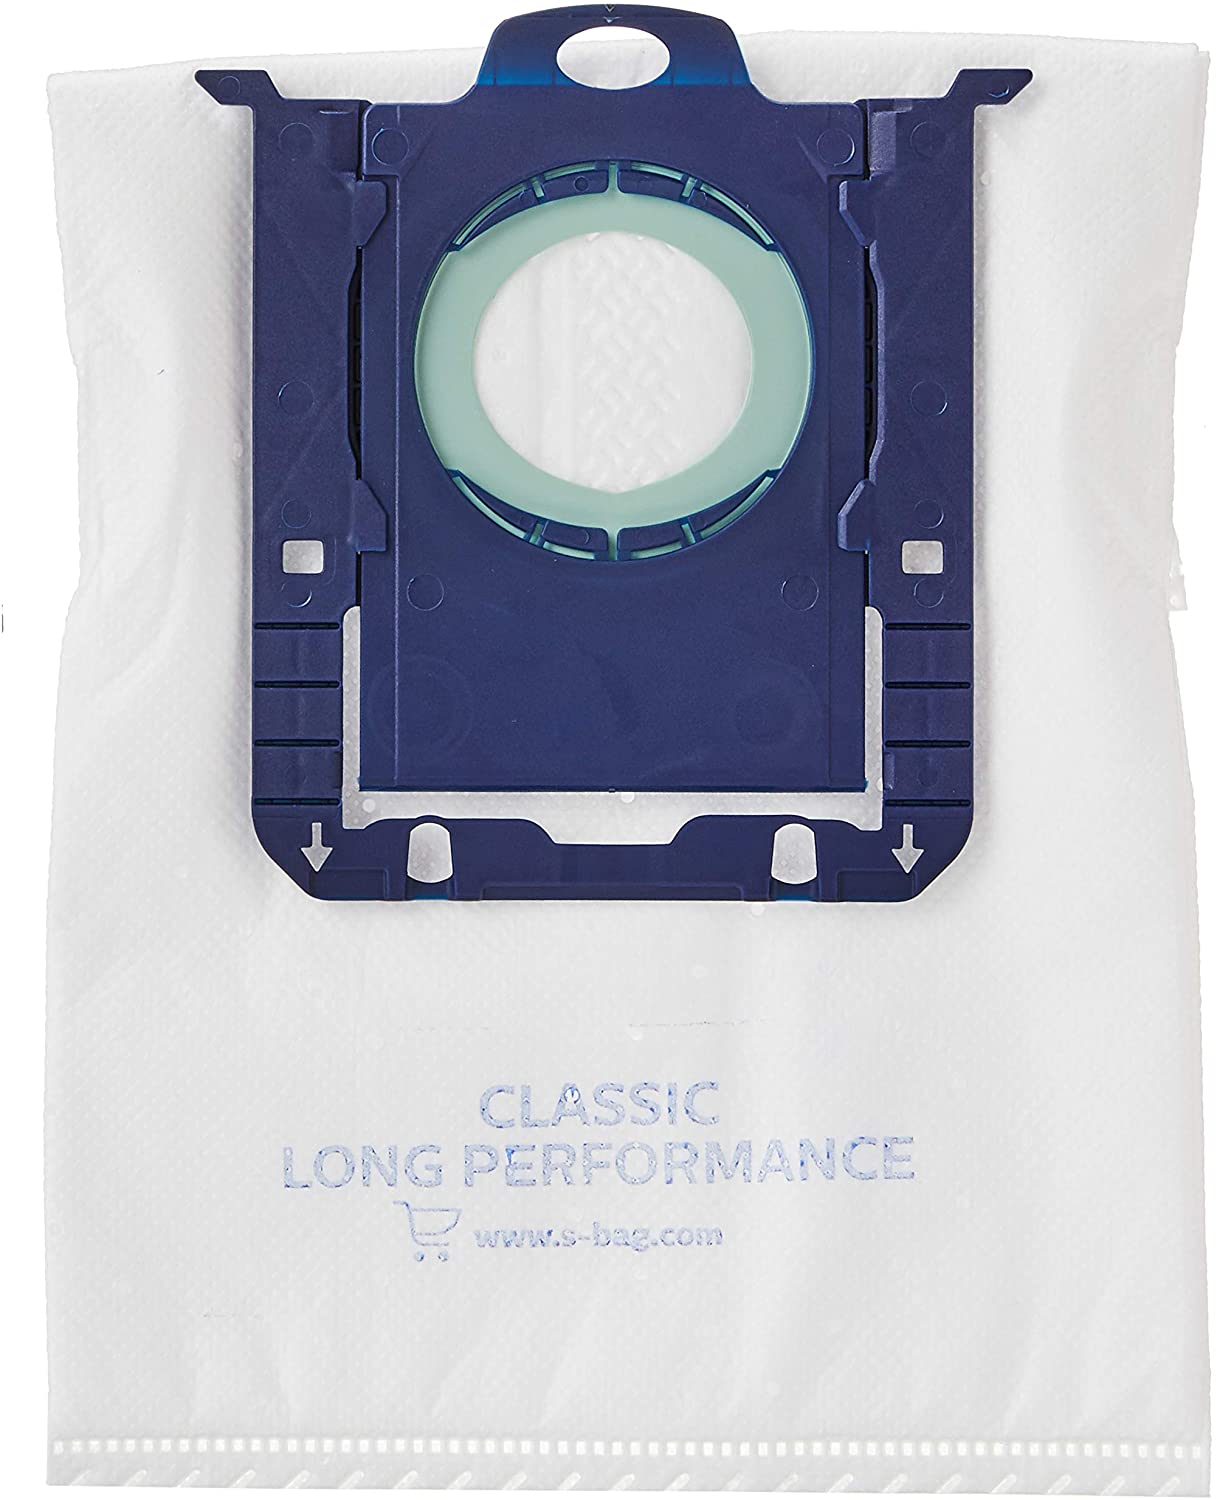 Philips FC8021 S-Bag Classic Vacuum Cleaner Bags - Pack of 4